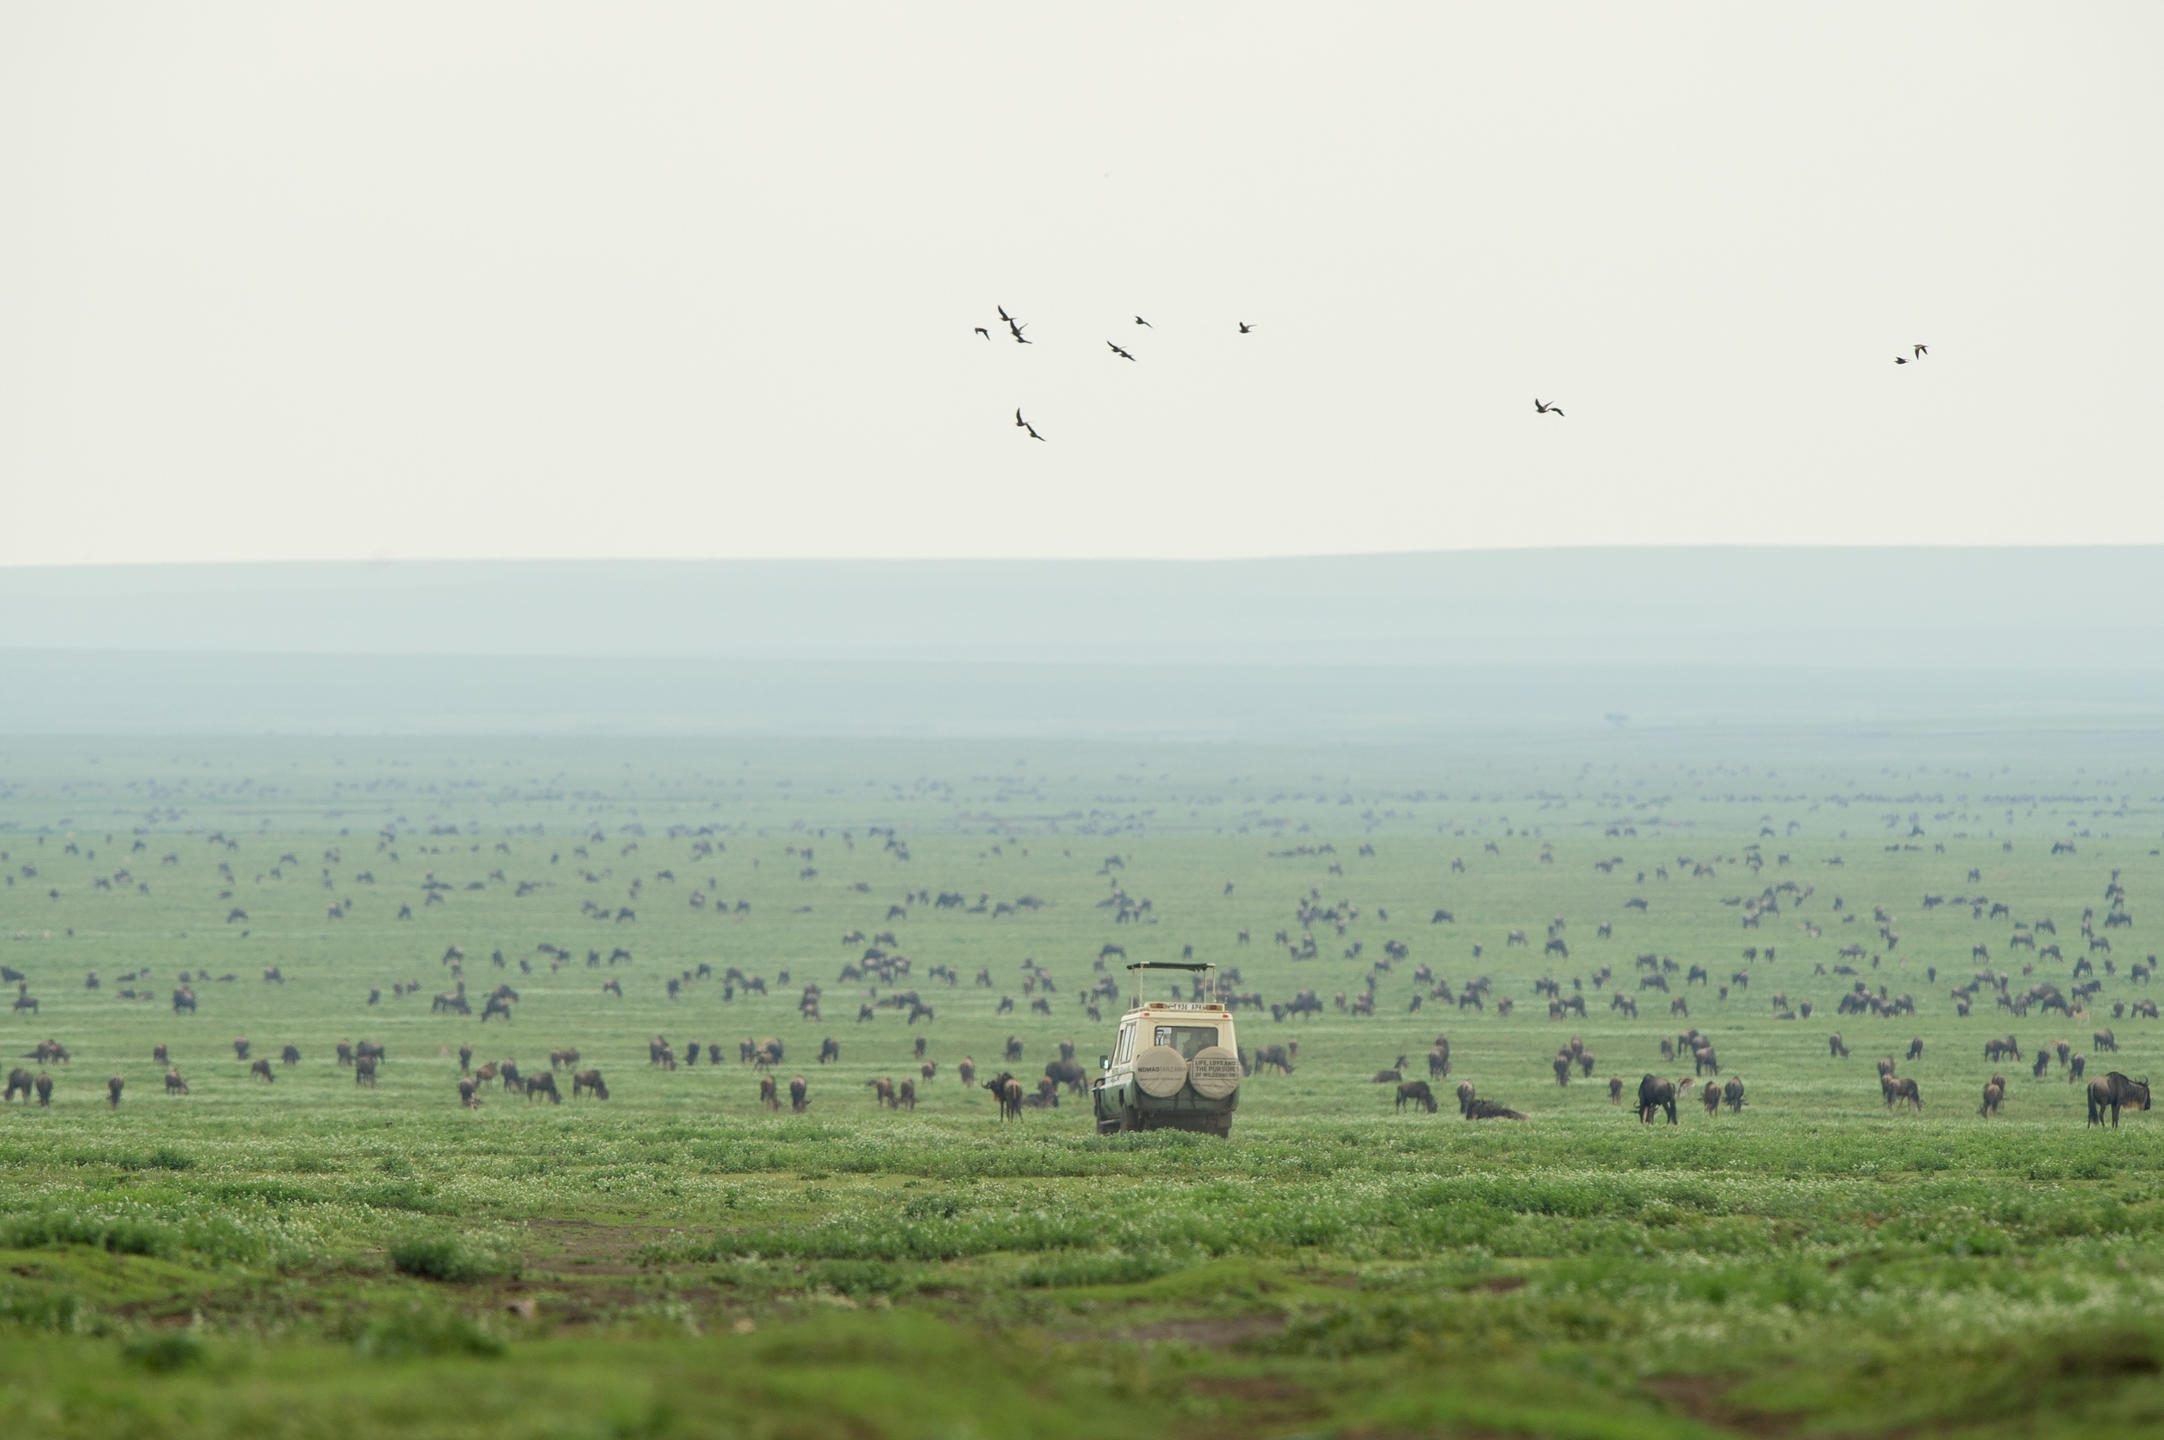 a herd of animals walking across a lush green field.